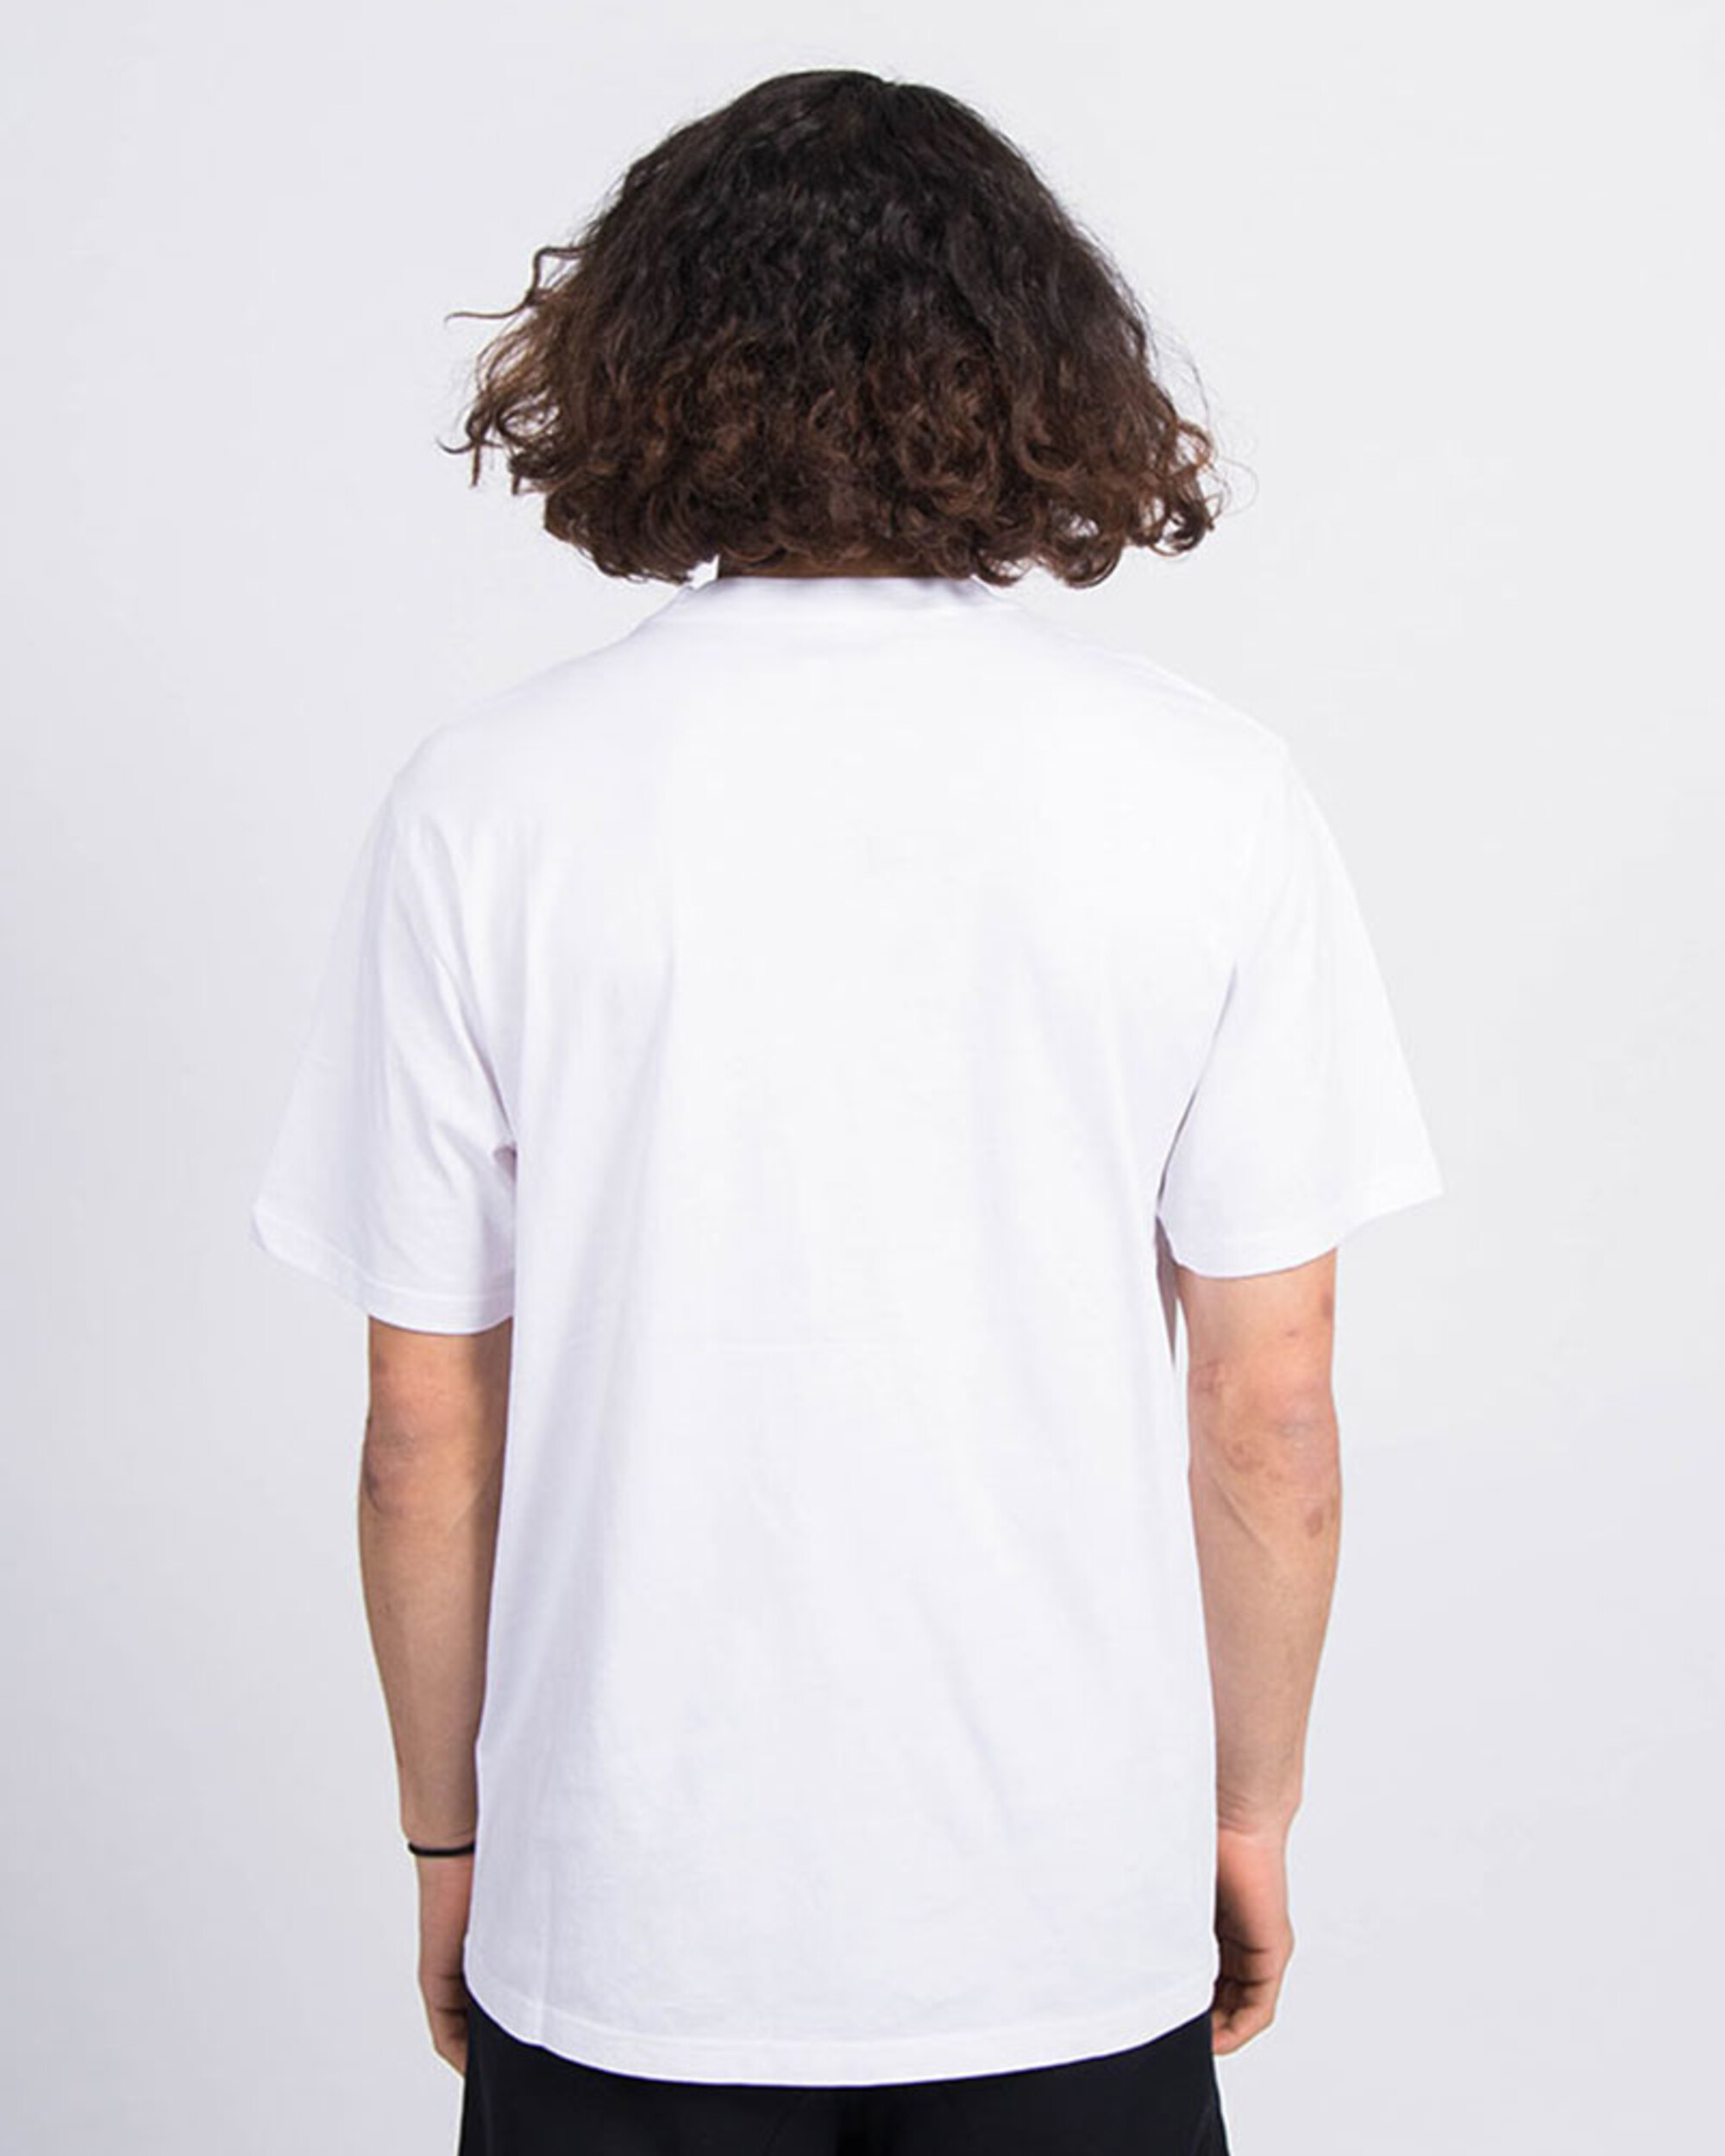 Carhartt S/S Pocket T-Shirt Jersey White